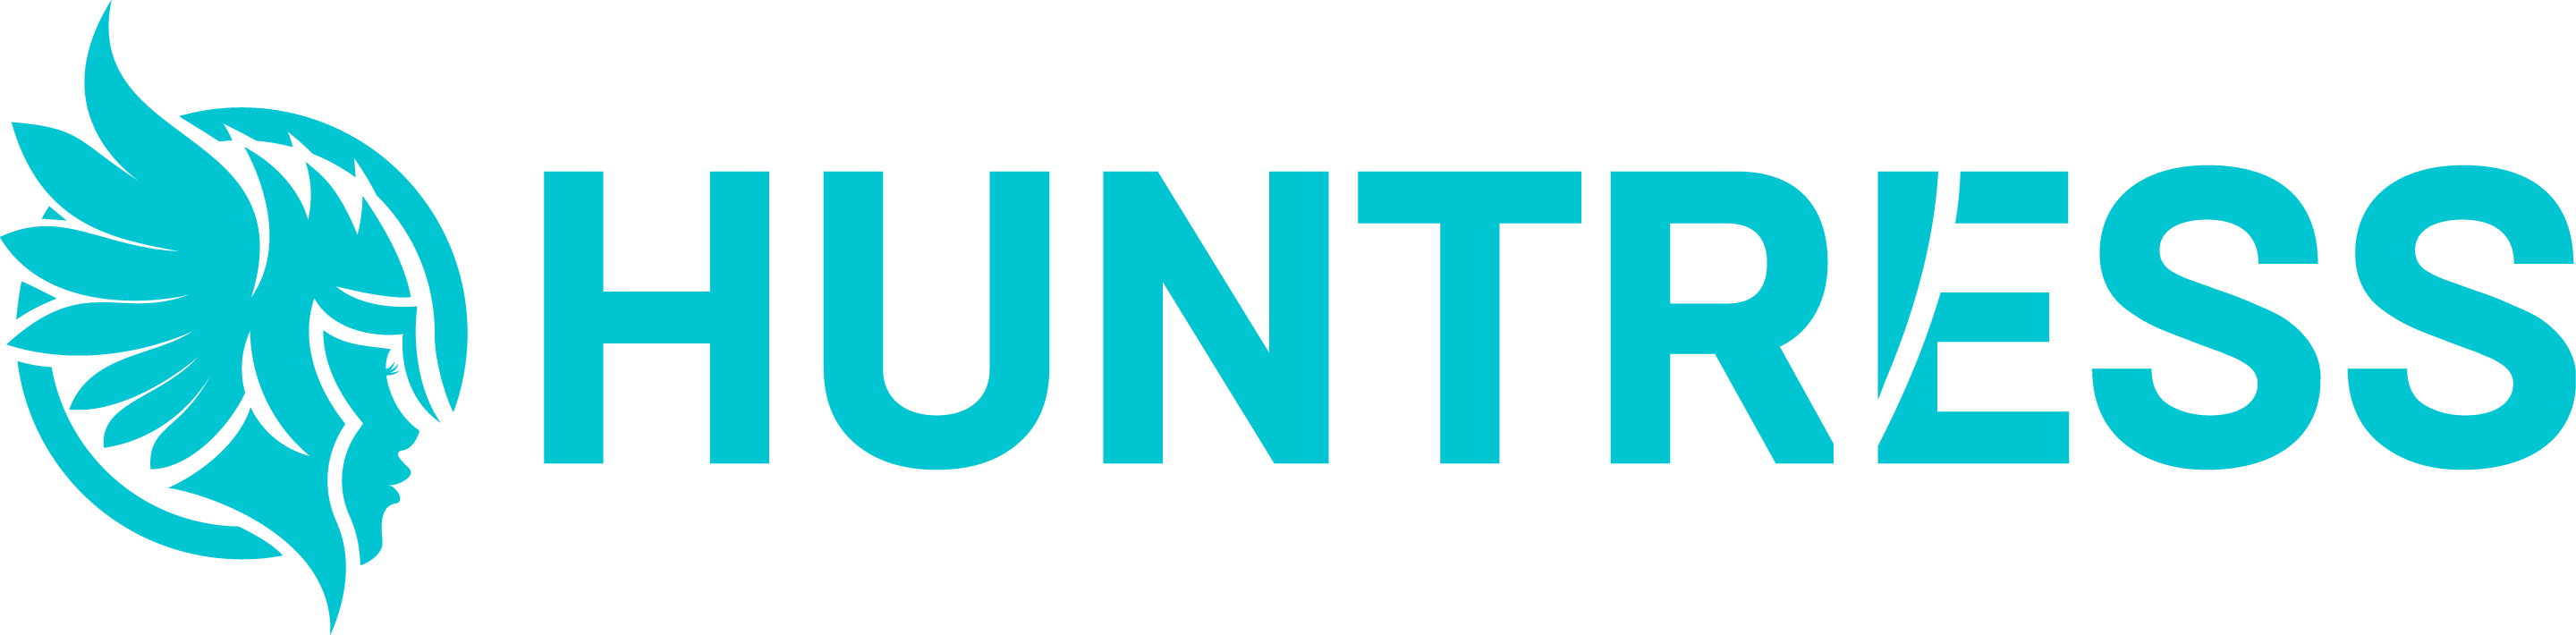 Huntress Logo - Wide Teal